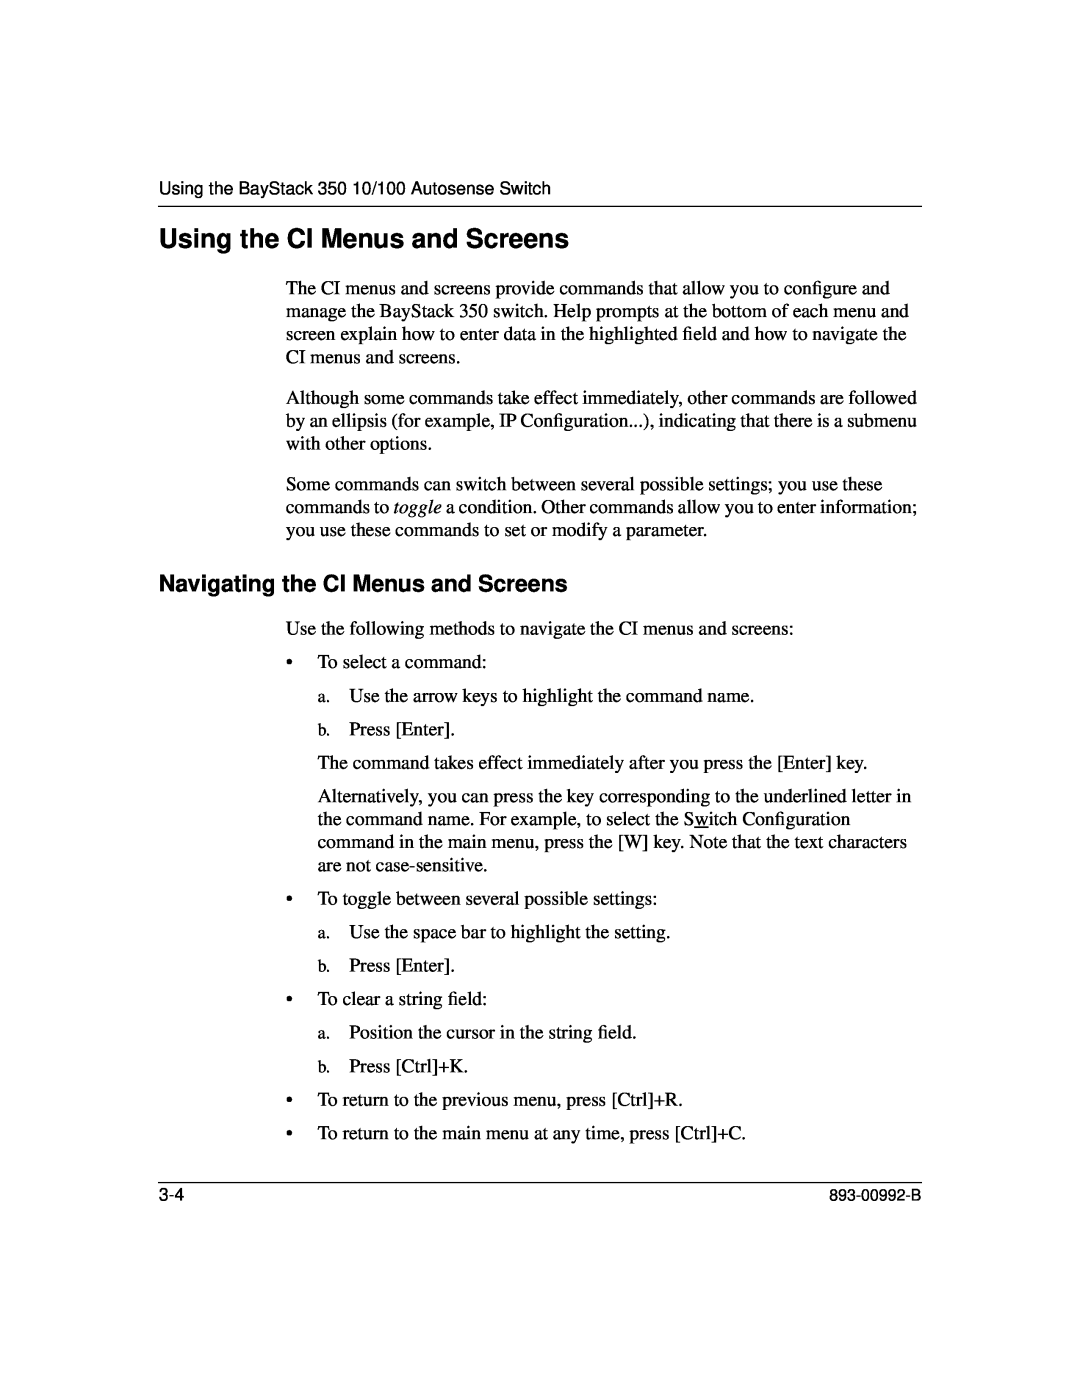 Bay Technical Associates 350 manual Using the CI Menus and Screens, Navigating the CI Menus and Screens 